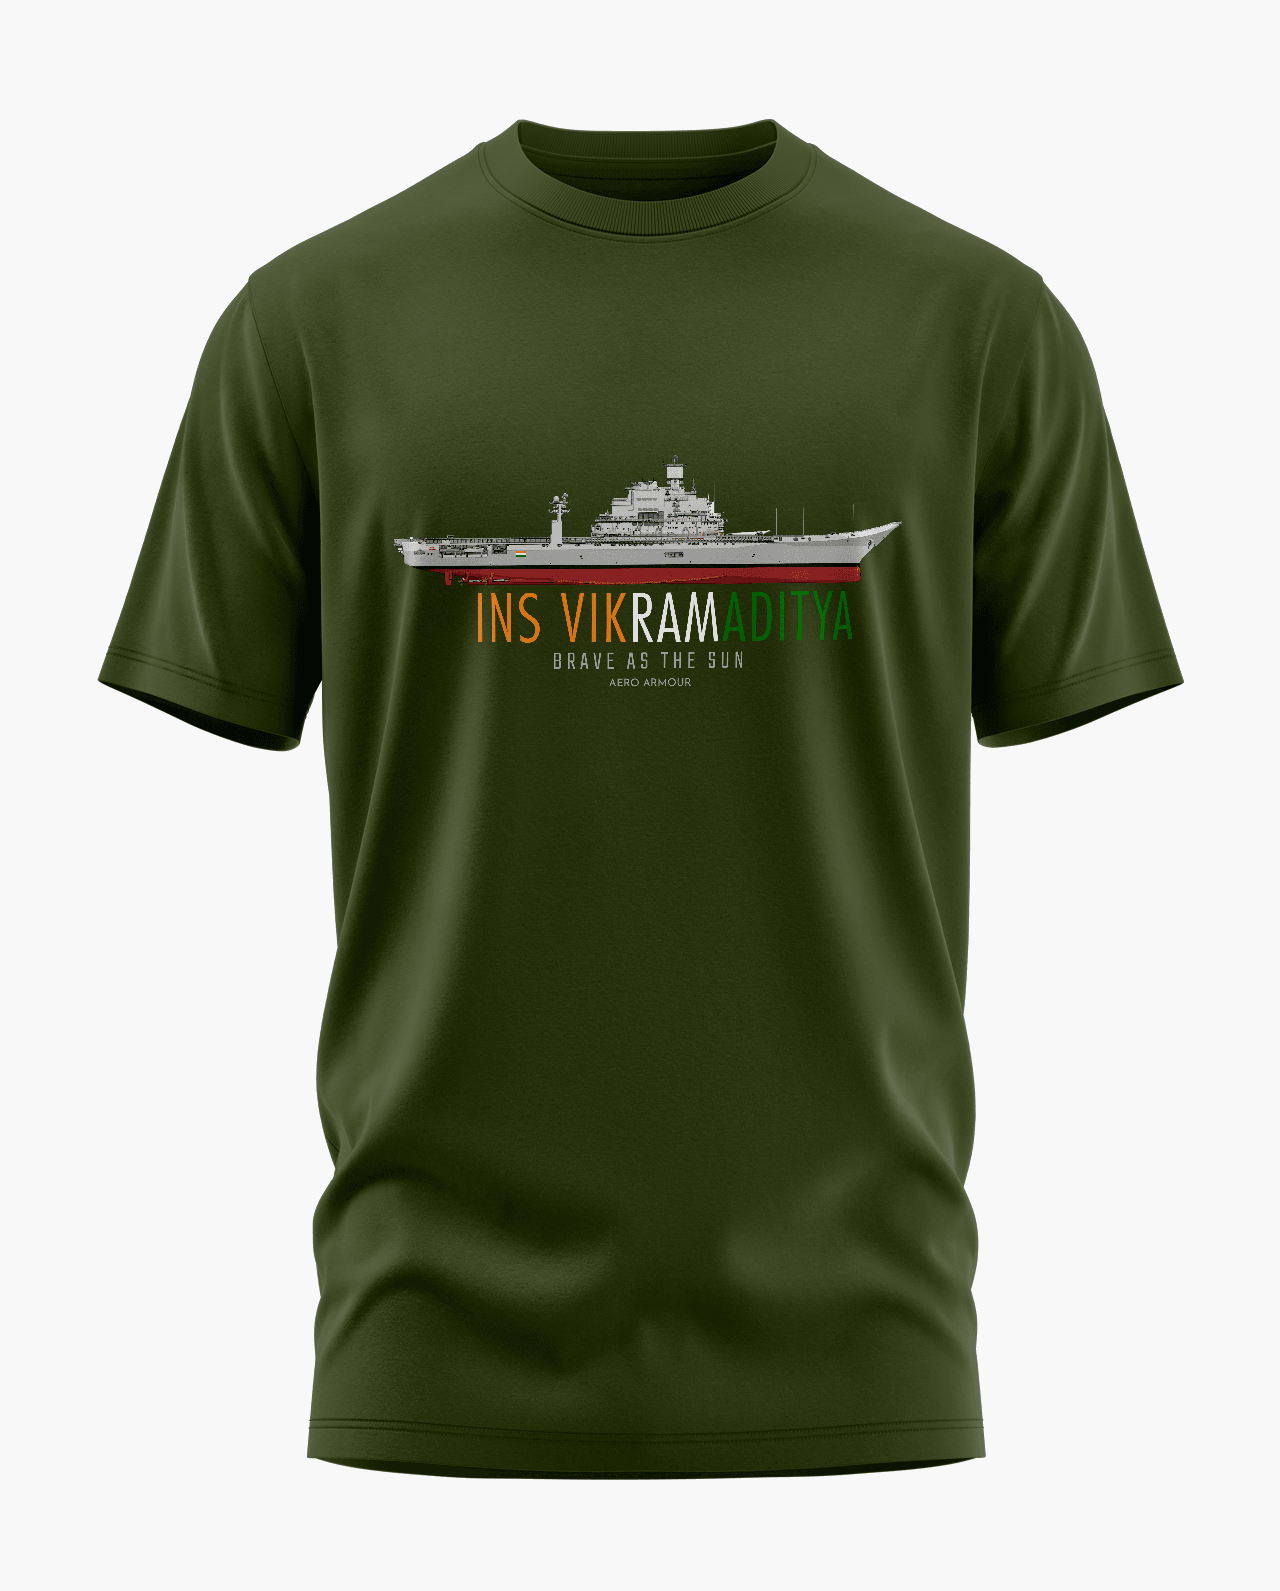 INS Vikramaditya India T-Shirt - Aero Armour